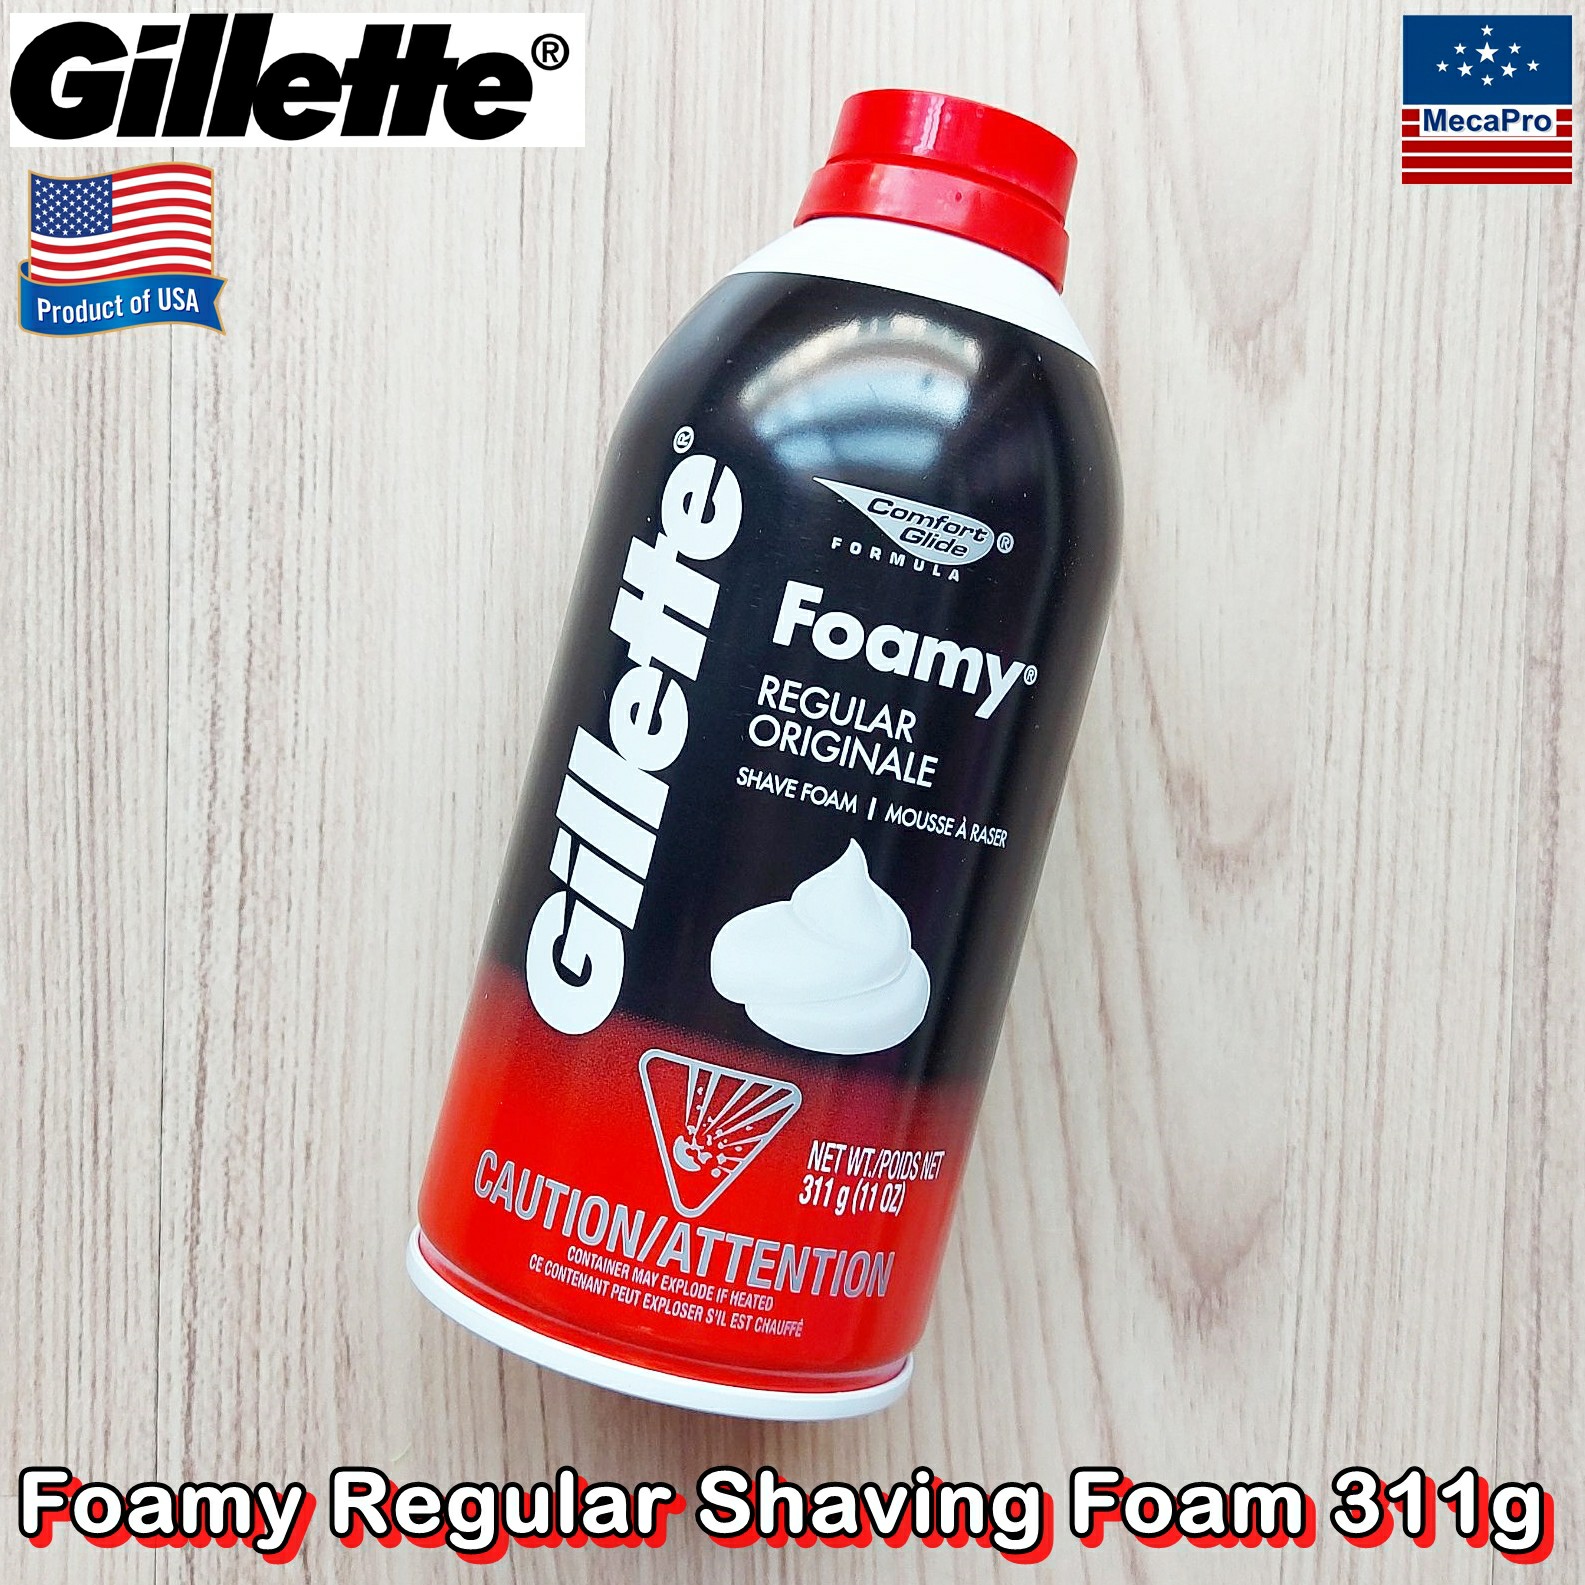 Gillette® Foamy Regular Shaving Foam 311g ยิลเลตต์ โฟมโกนหนวด สูตรปกติ